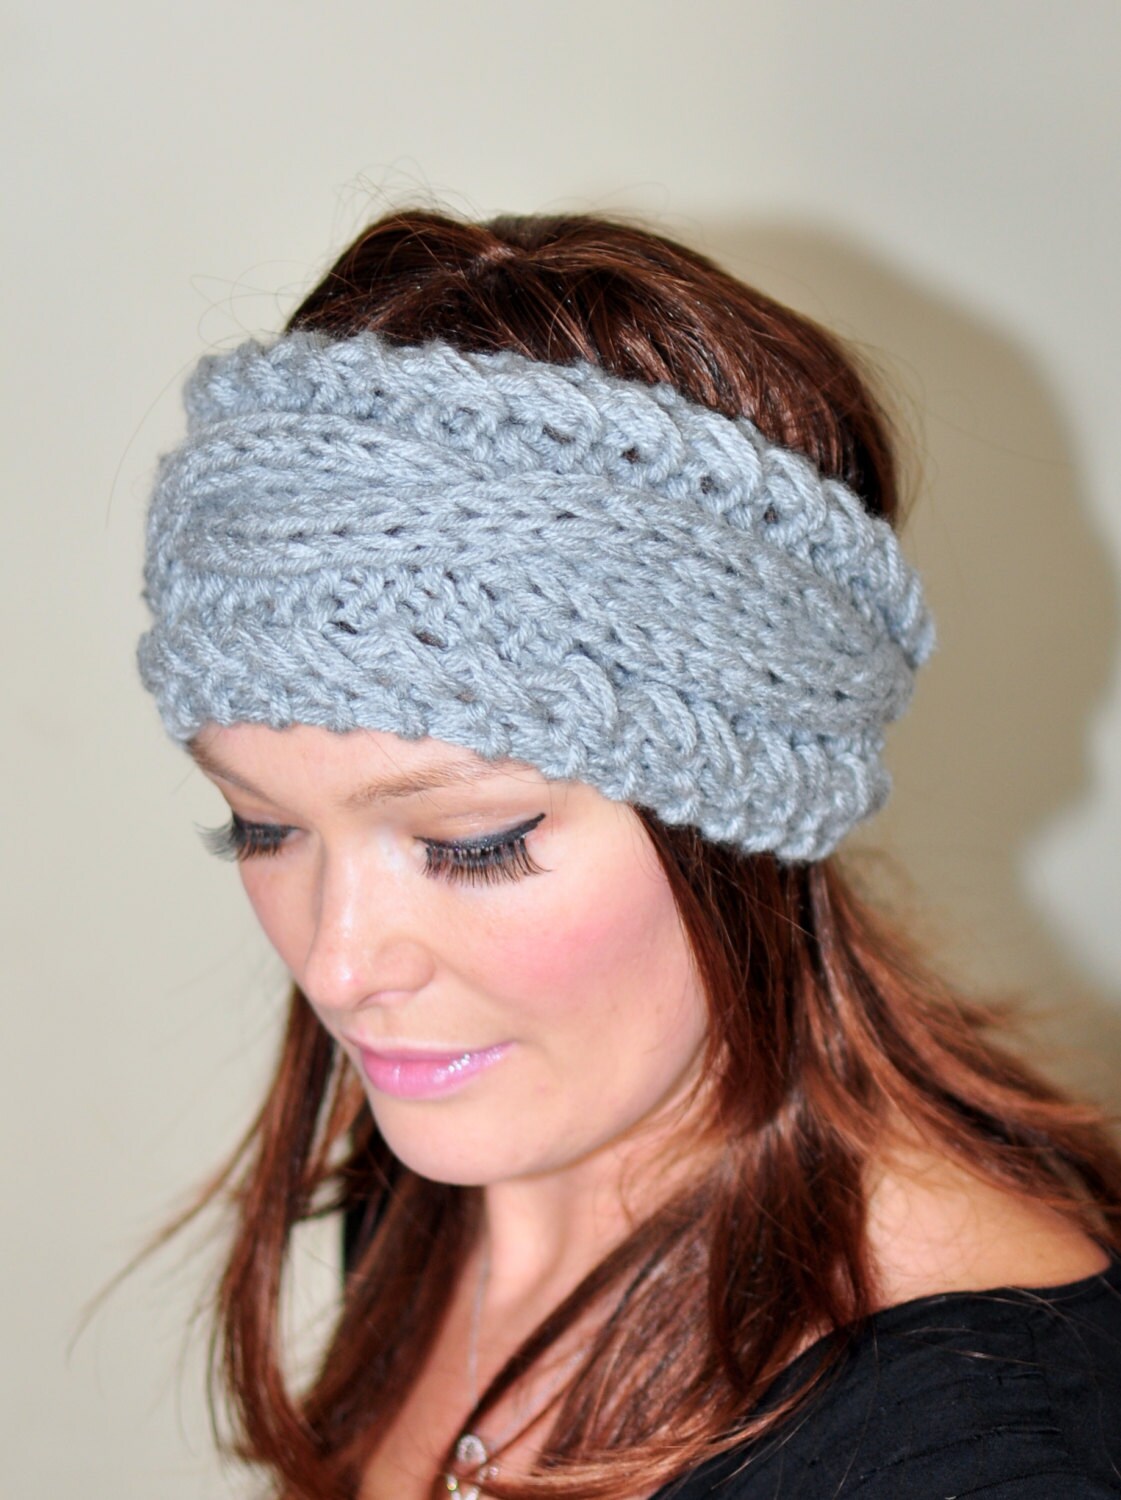 Cabled Knitted Headband Crochet Earwarmer Braided Headwrap Ear | Etsy